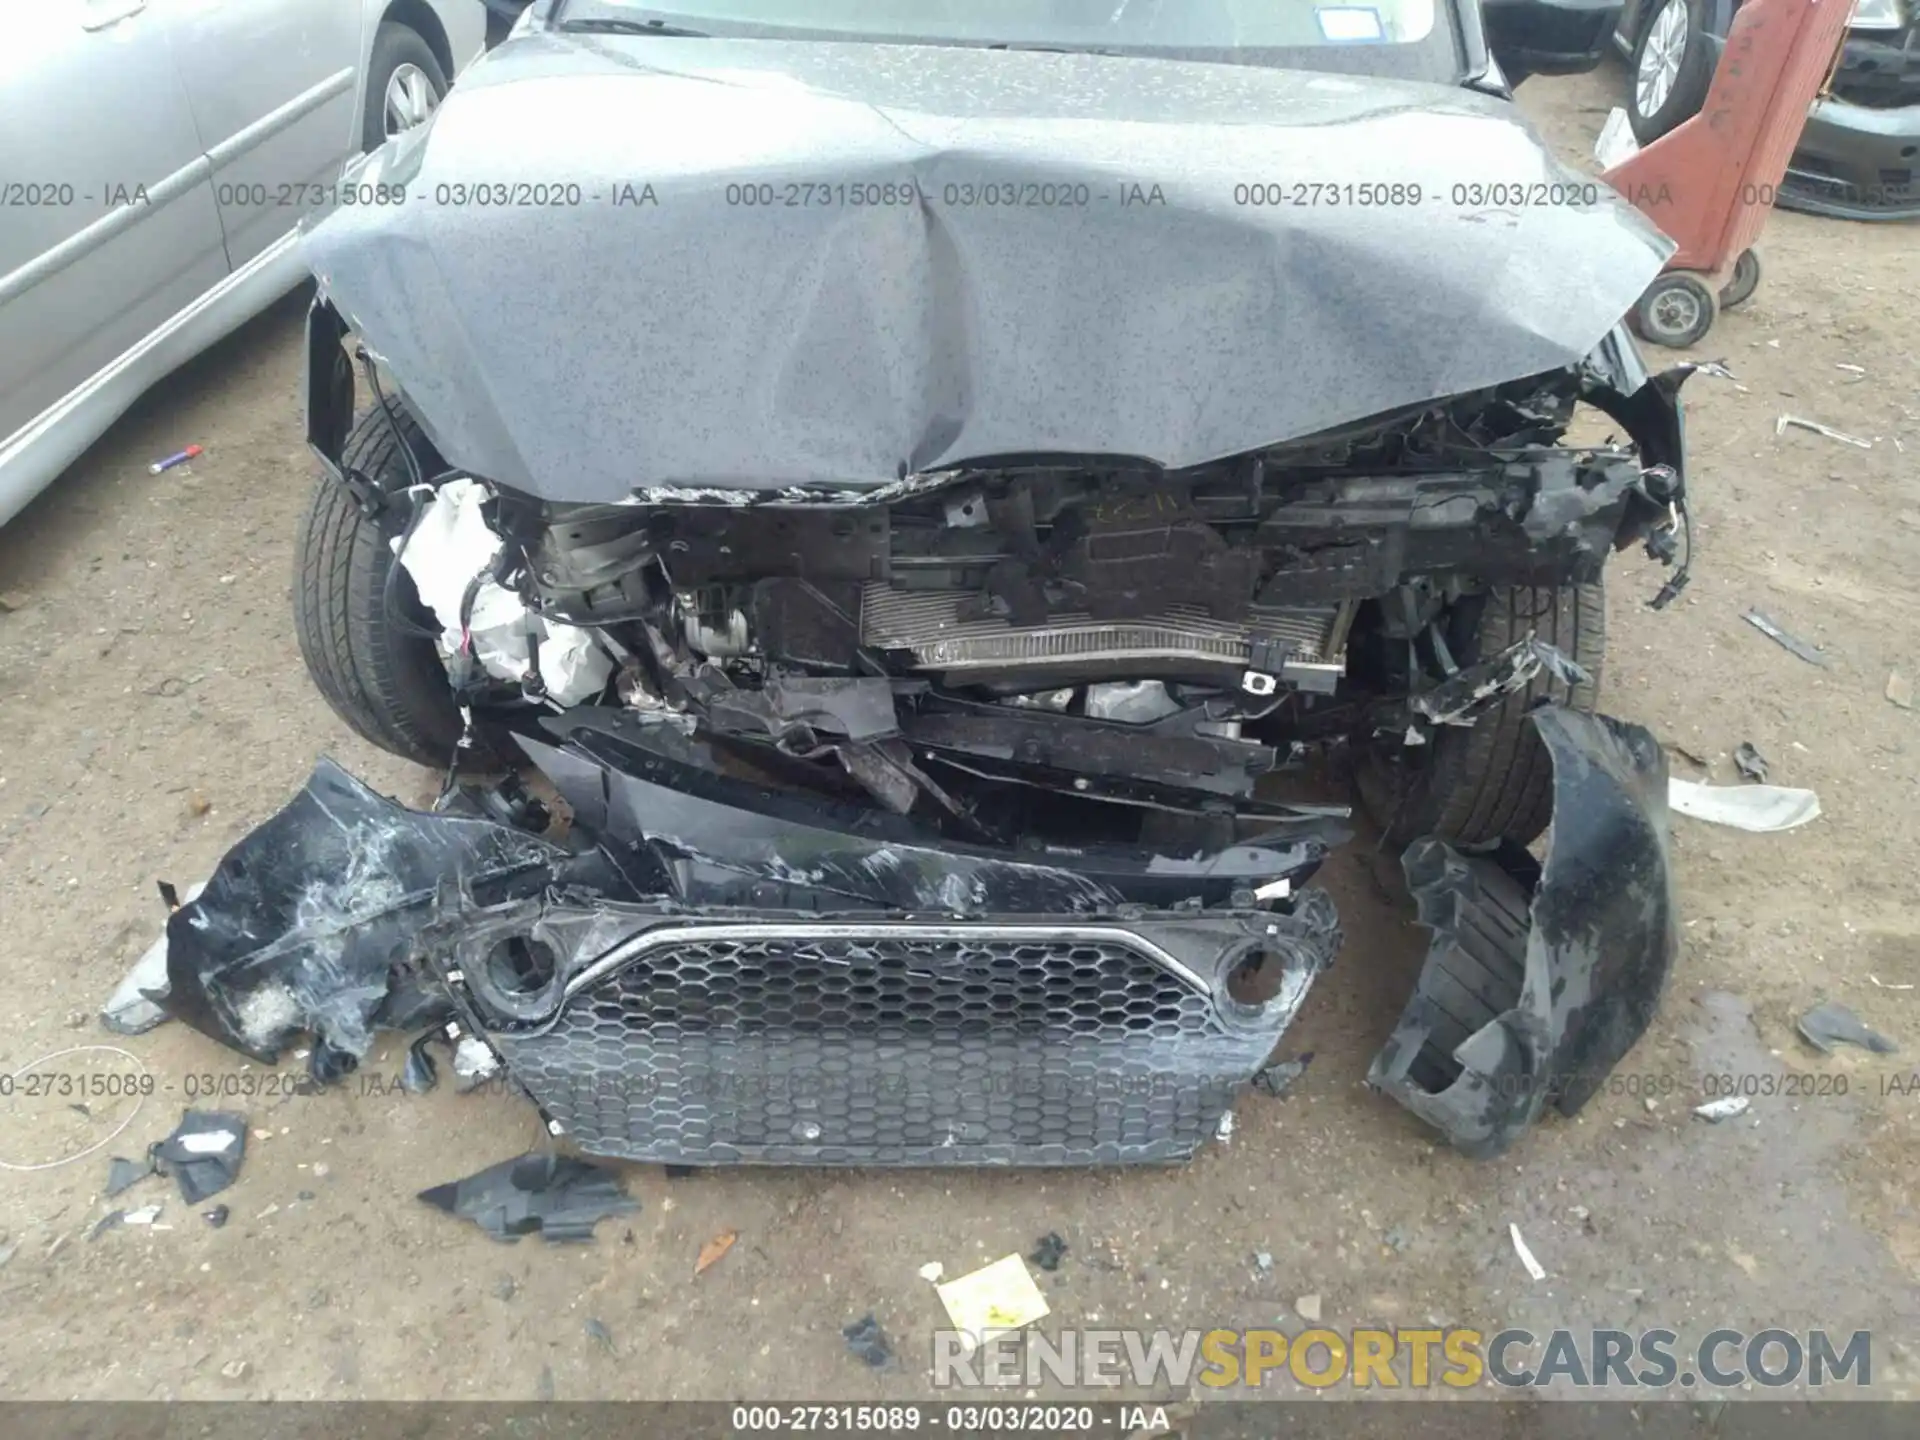 6 Photograph of a damaged car 3MYDLBJV3LY701576 TOYOTA YARIS 2020